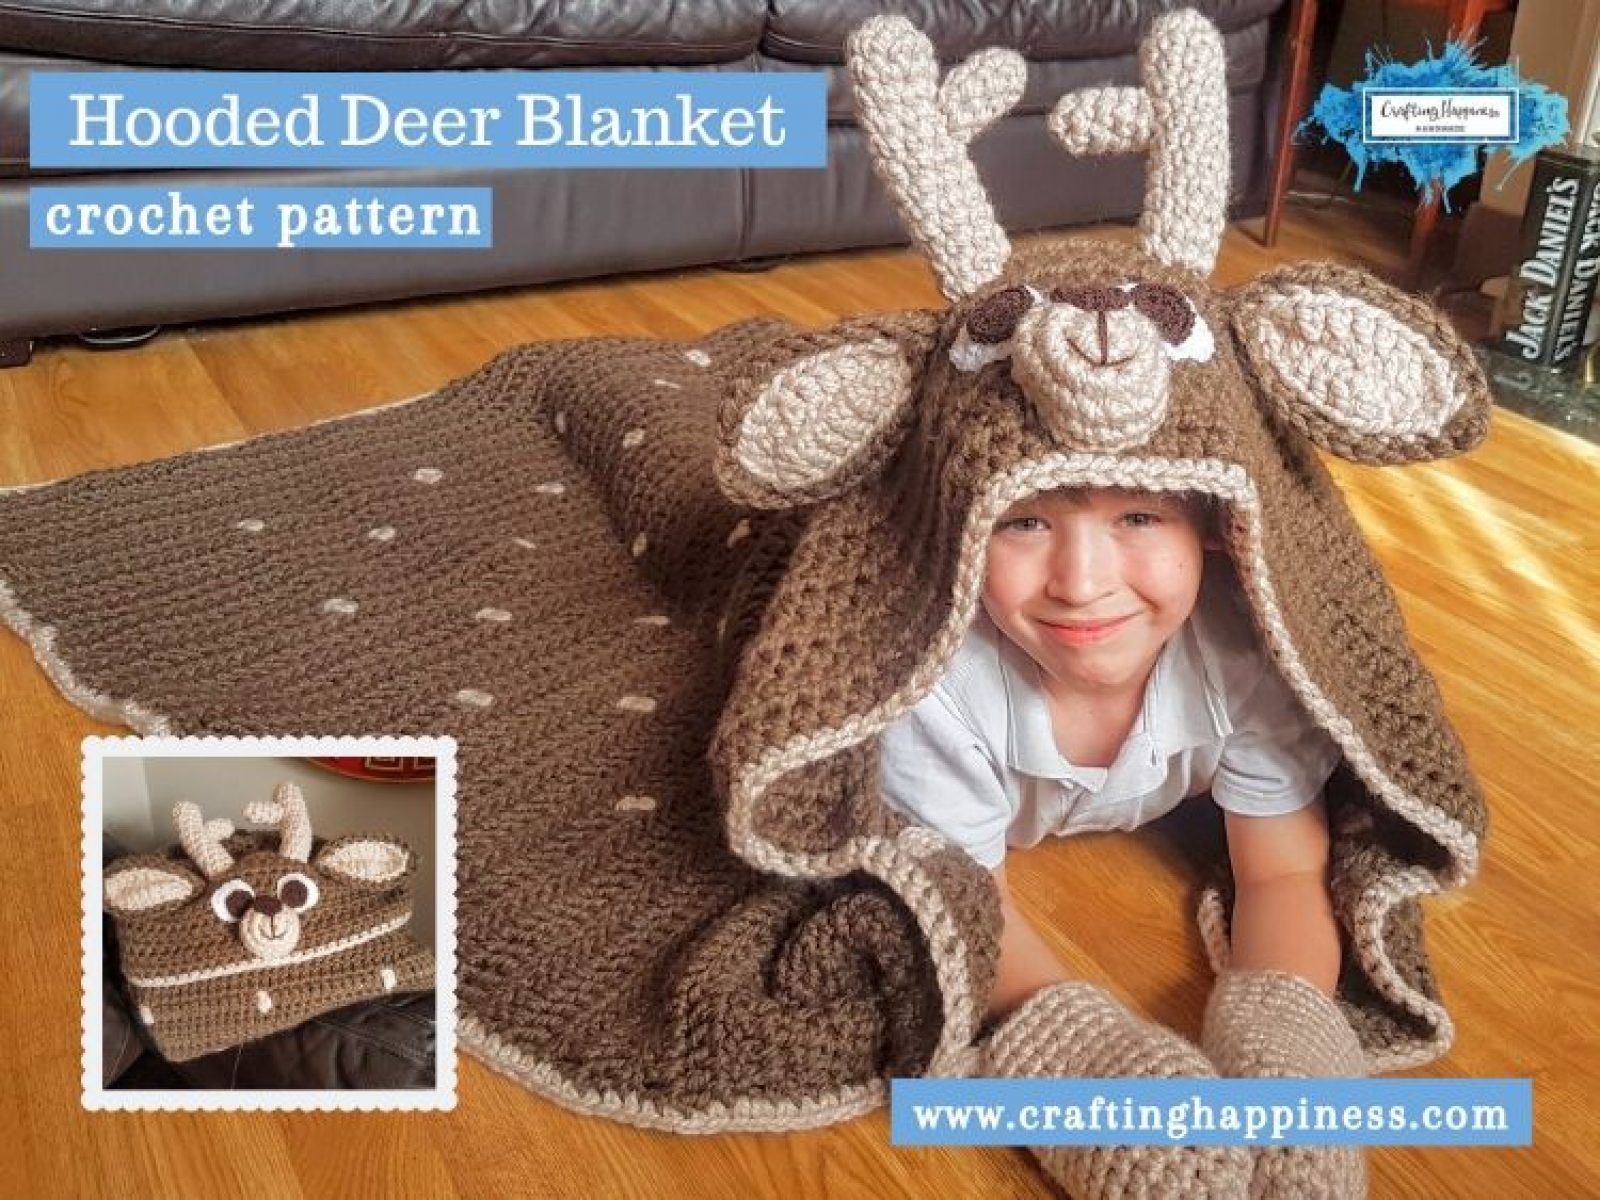 Hooded Deer Blanket by Crafting Happiness FACEBOOK POSTER